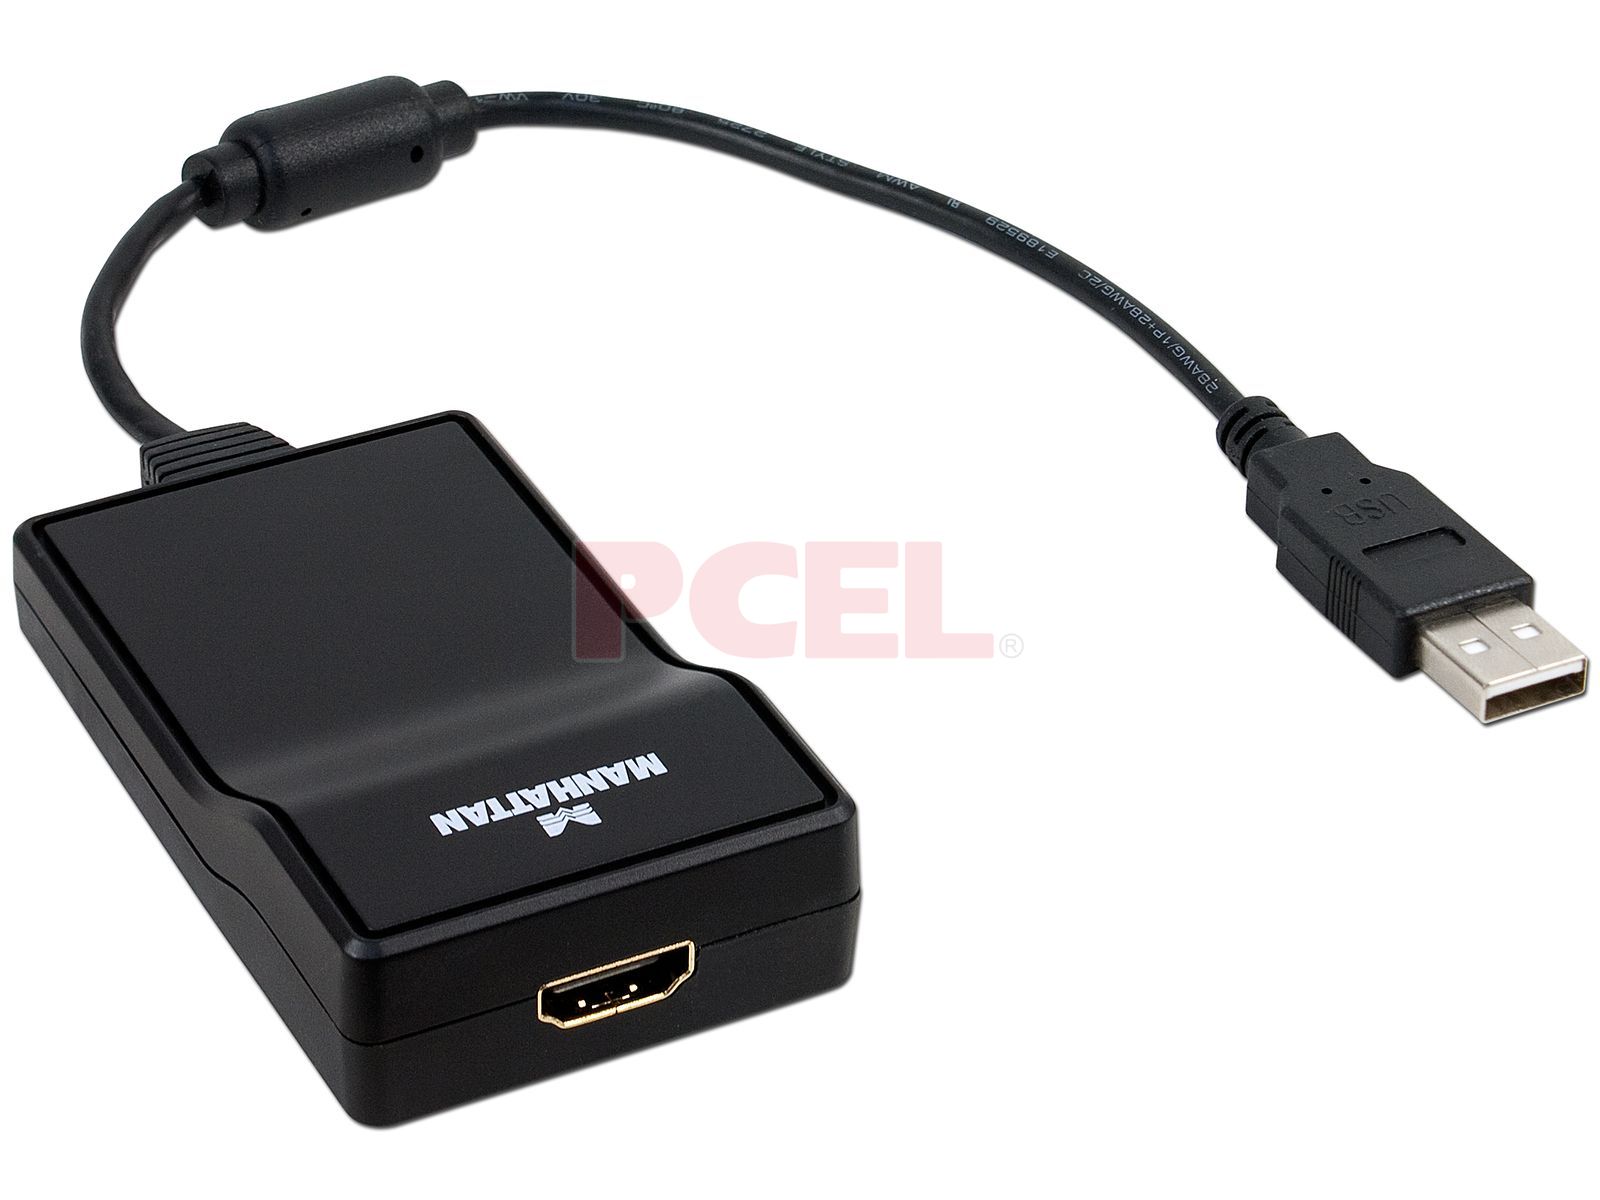 ▷ Adaptadores USB a HDMI: ¿funcionan o son una estafa?